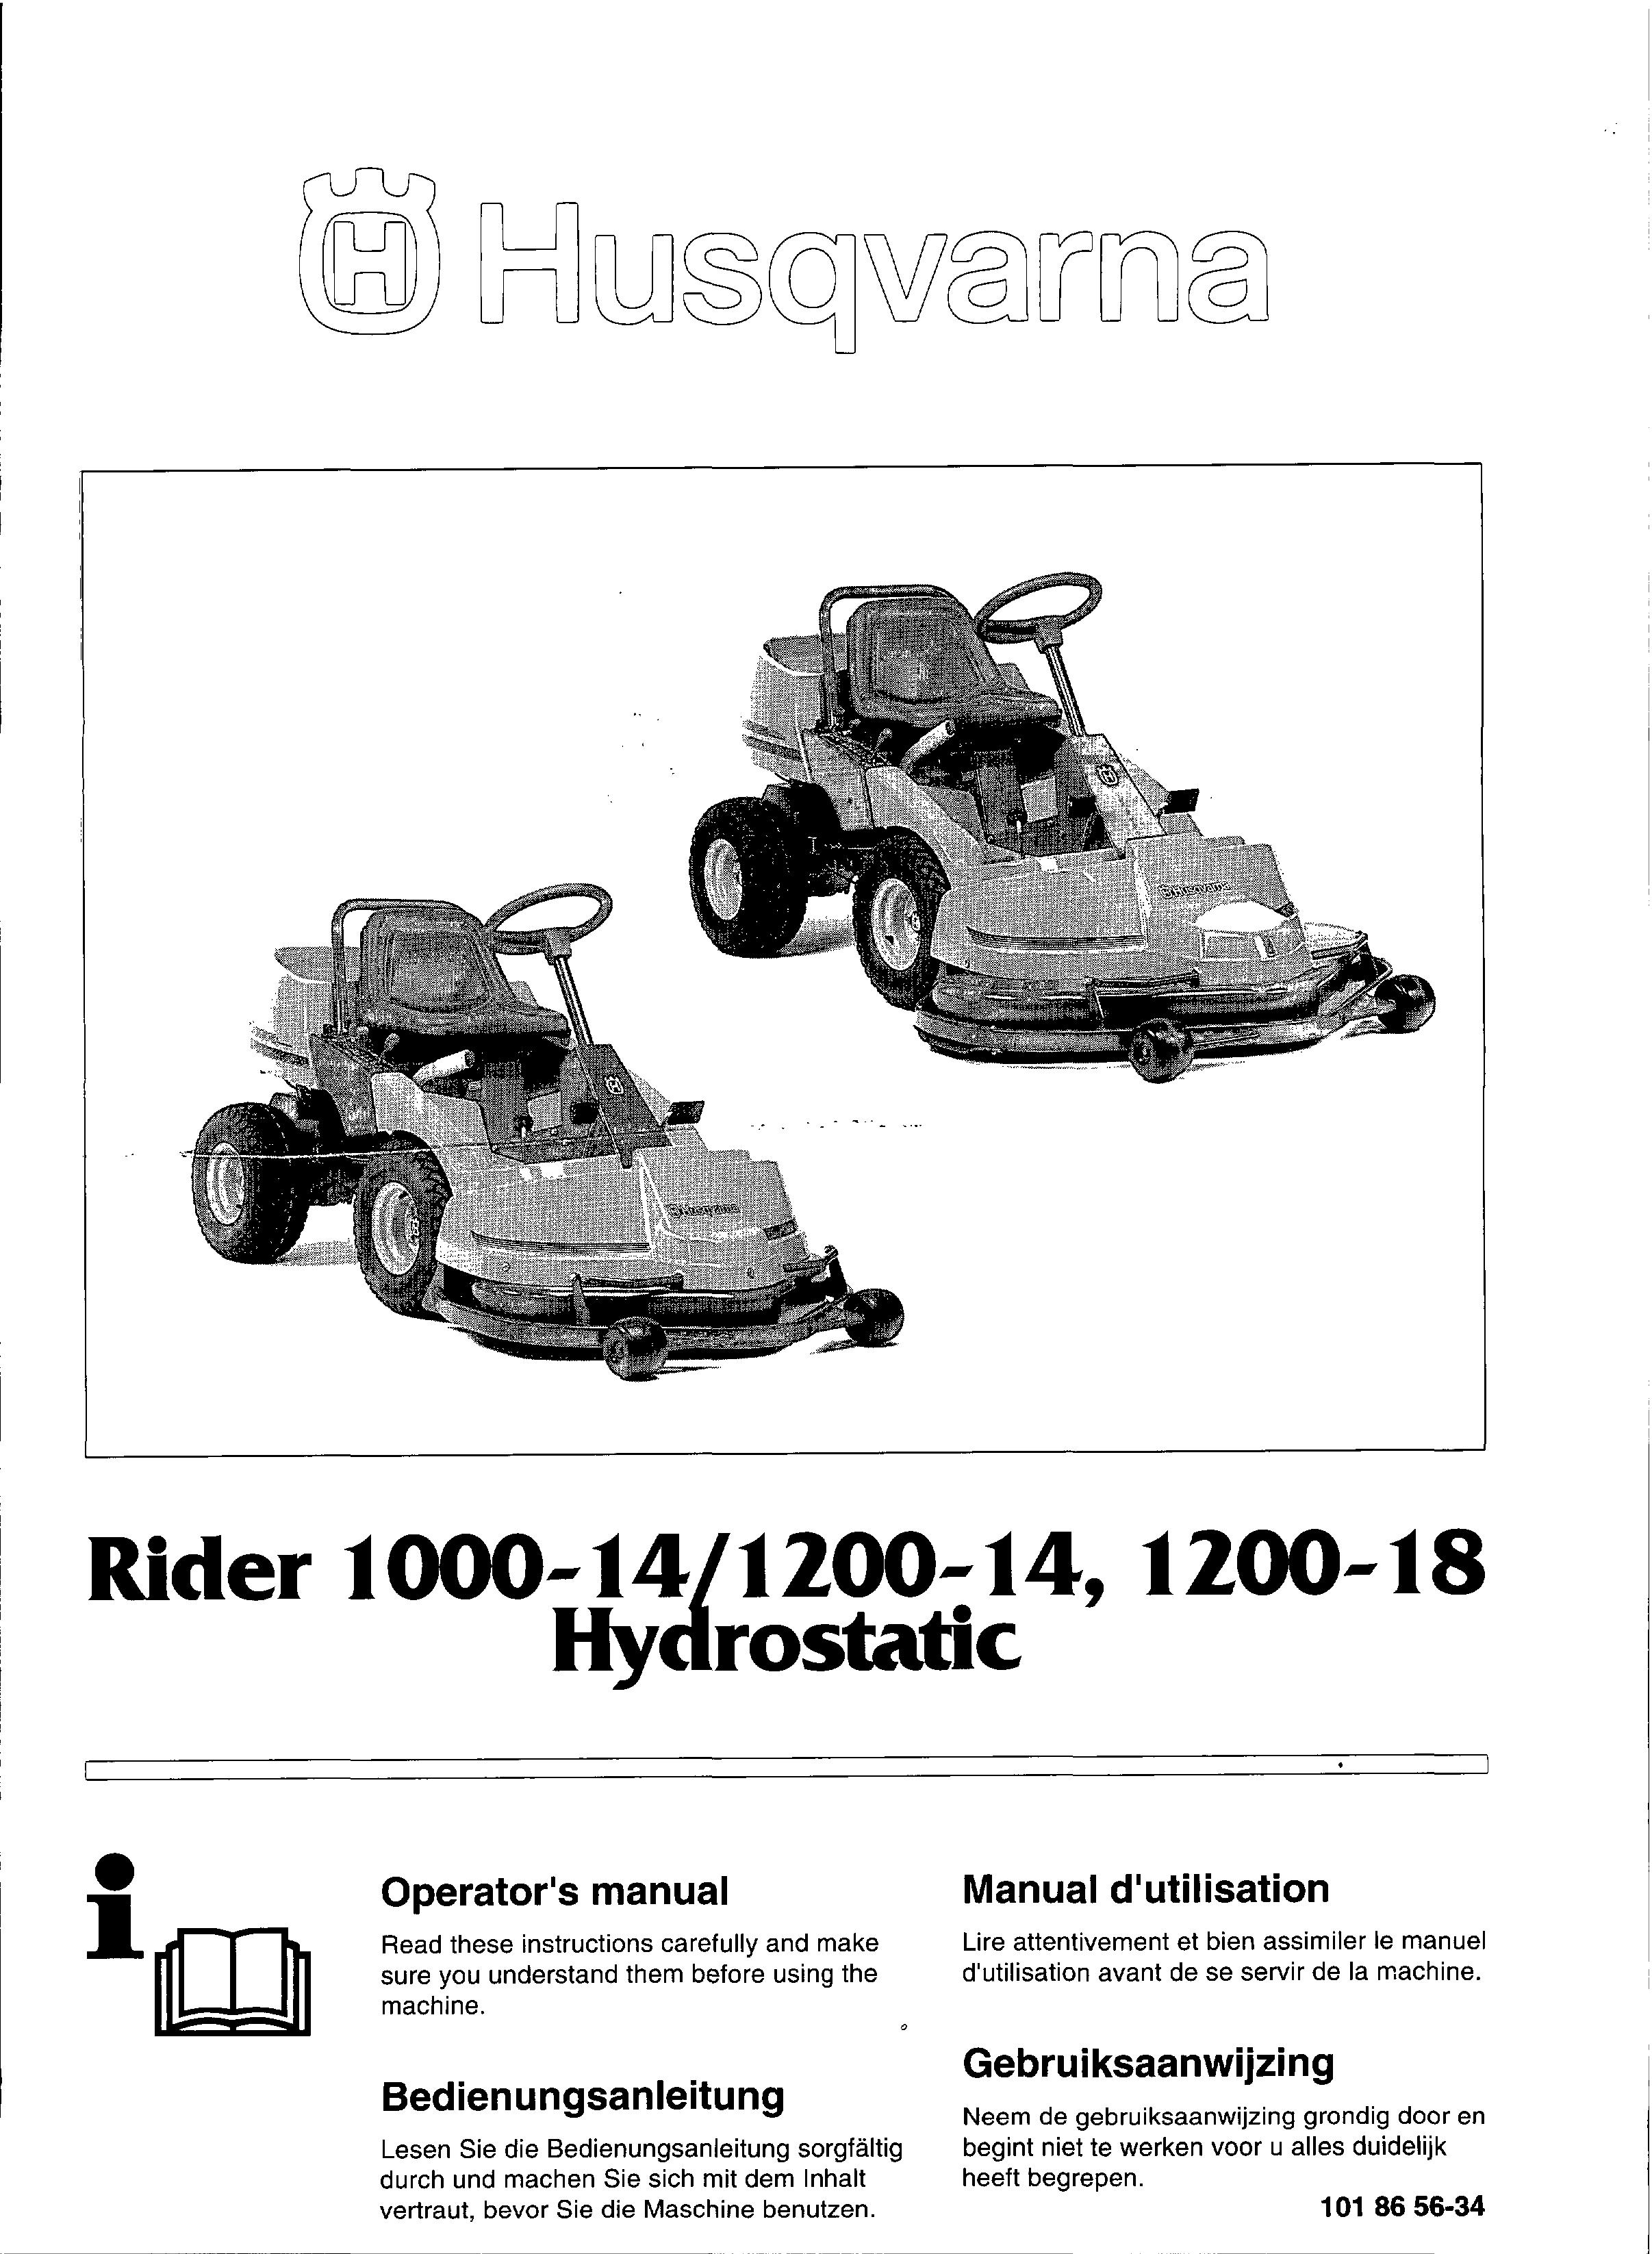 Husqvarna 1200-18 Lawn Mower User Manual